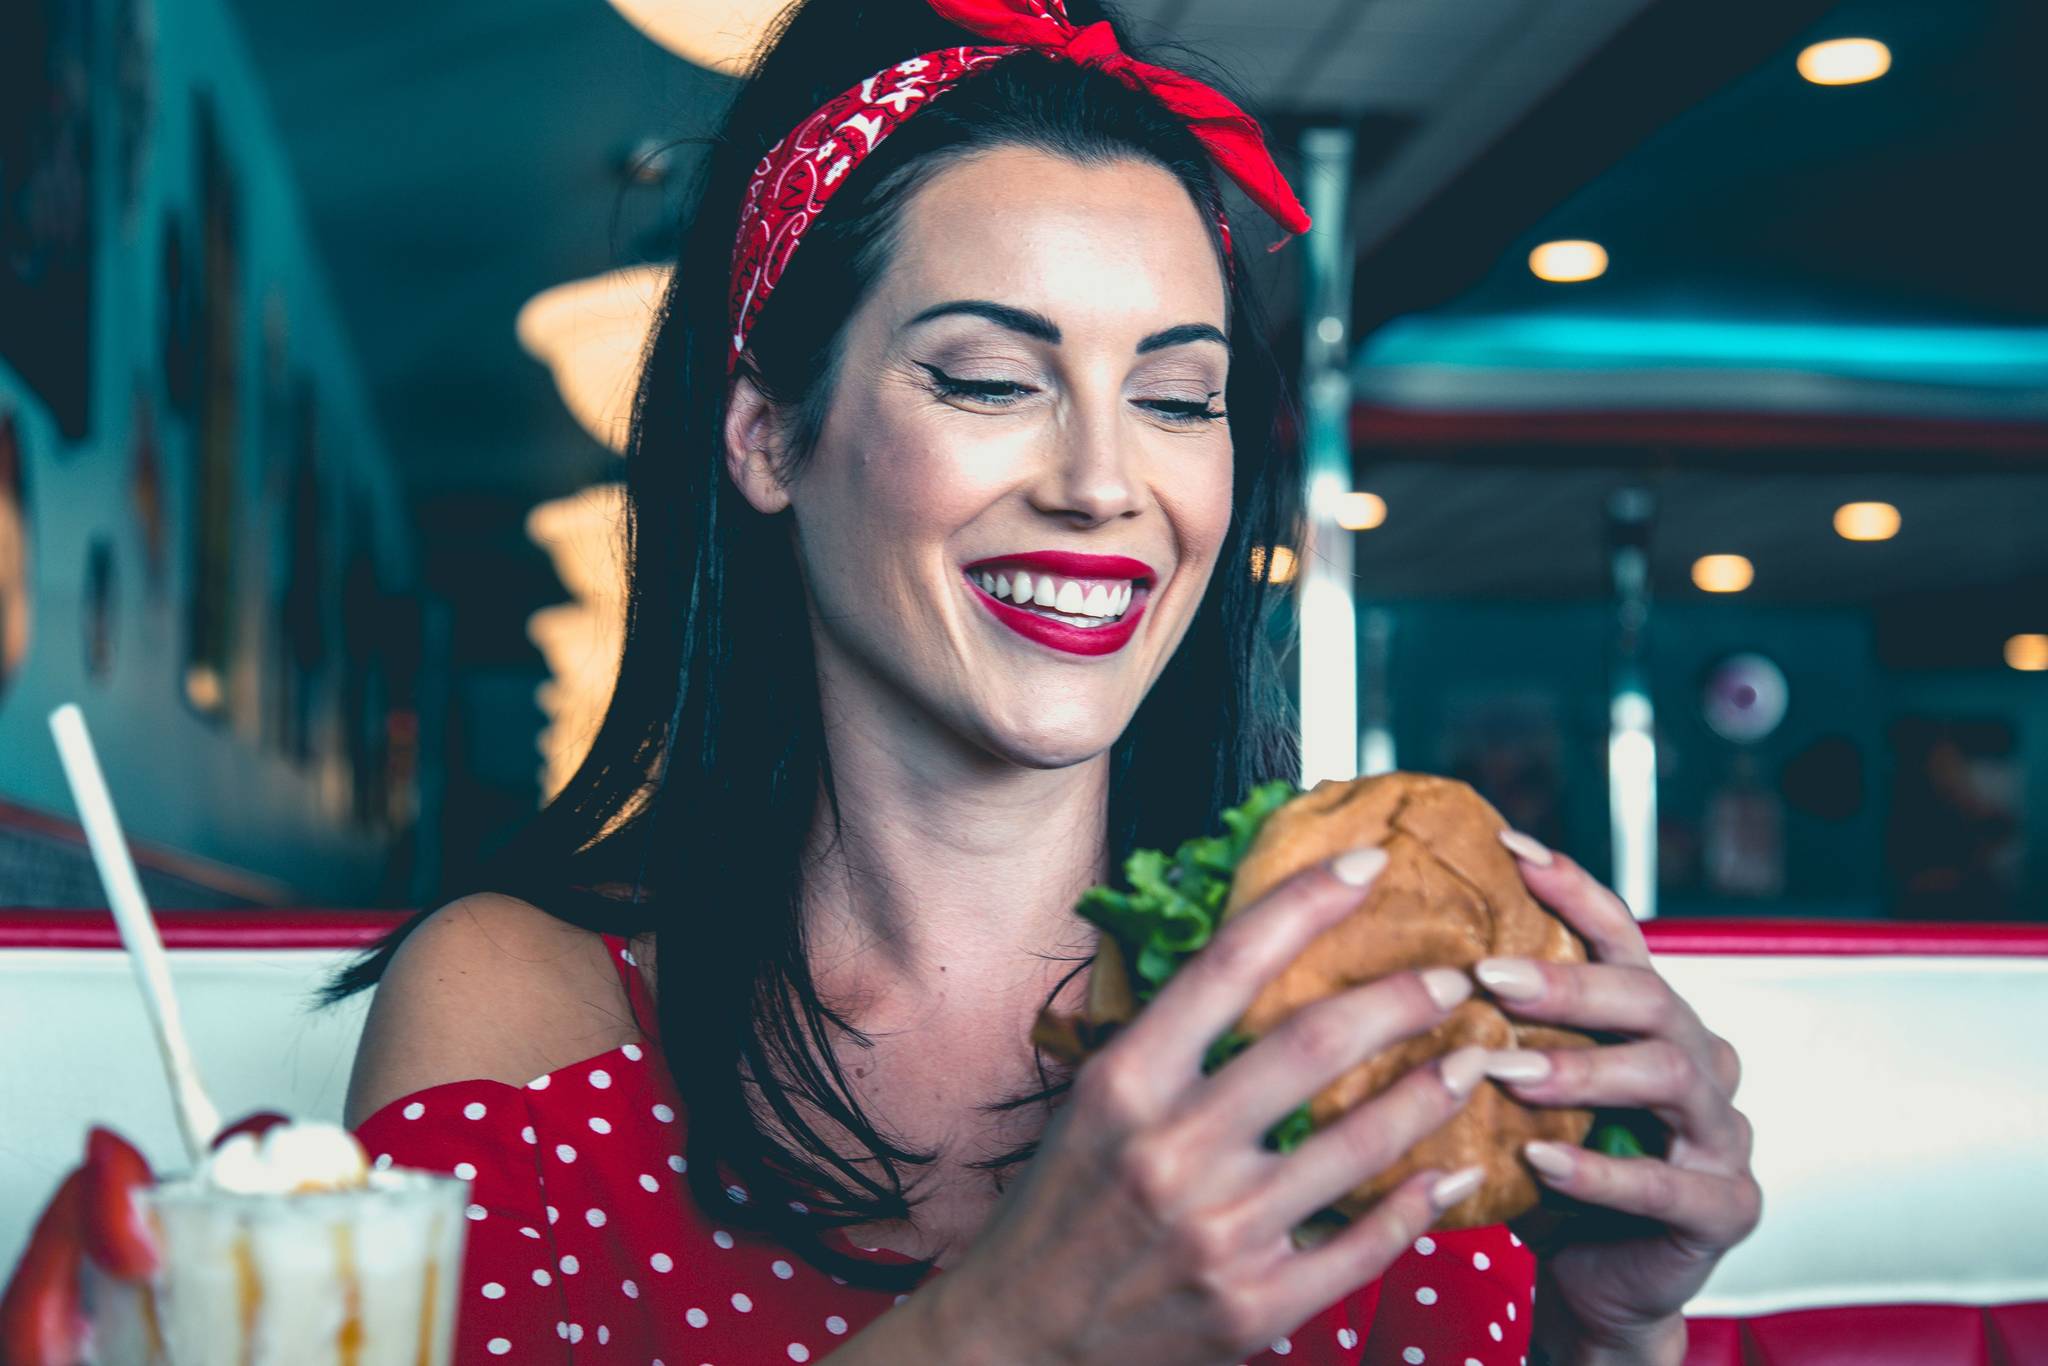 Burger King celebrates singledom on Valentine's